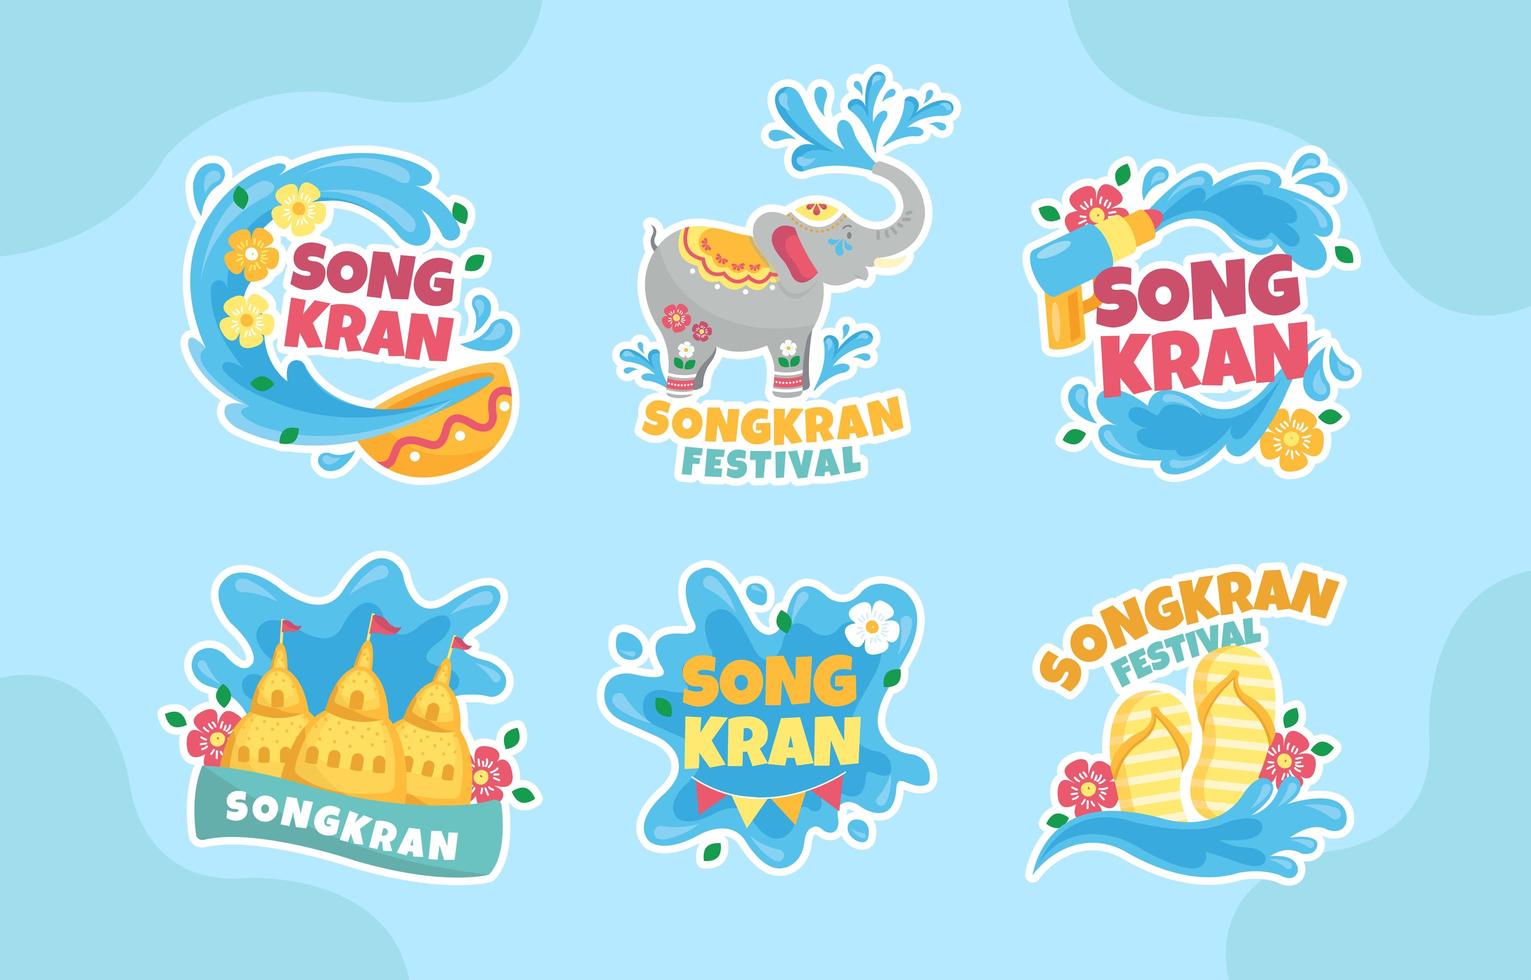 Songkran Fun Water Splashing Festival vector